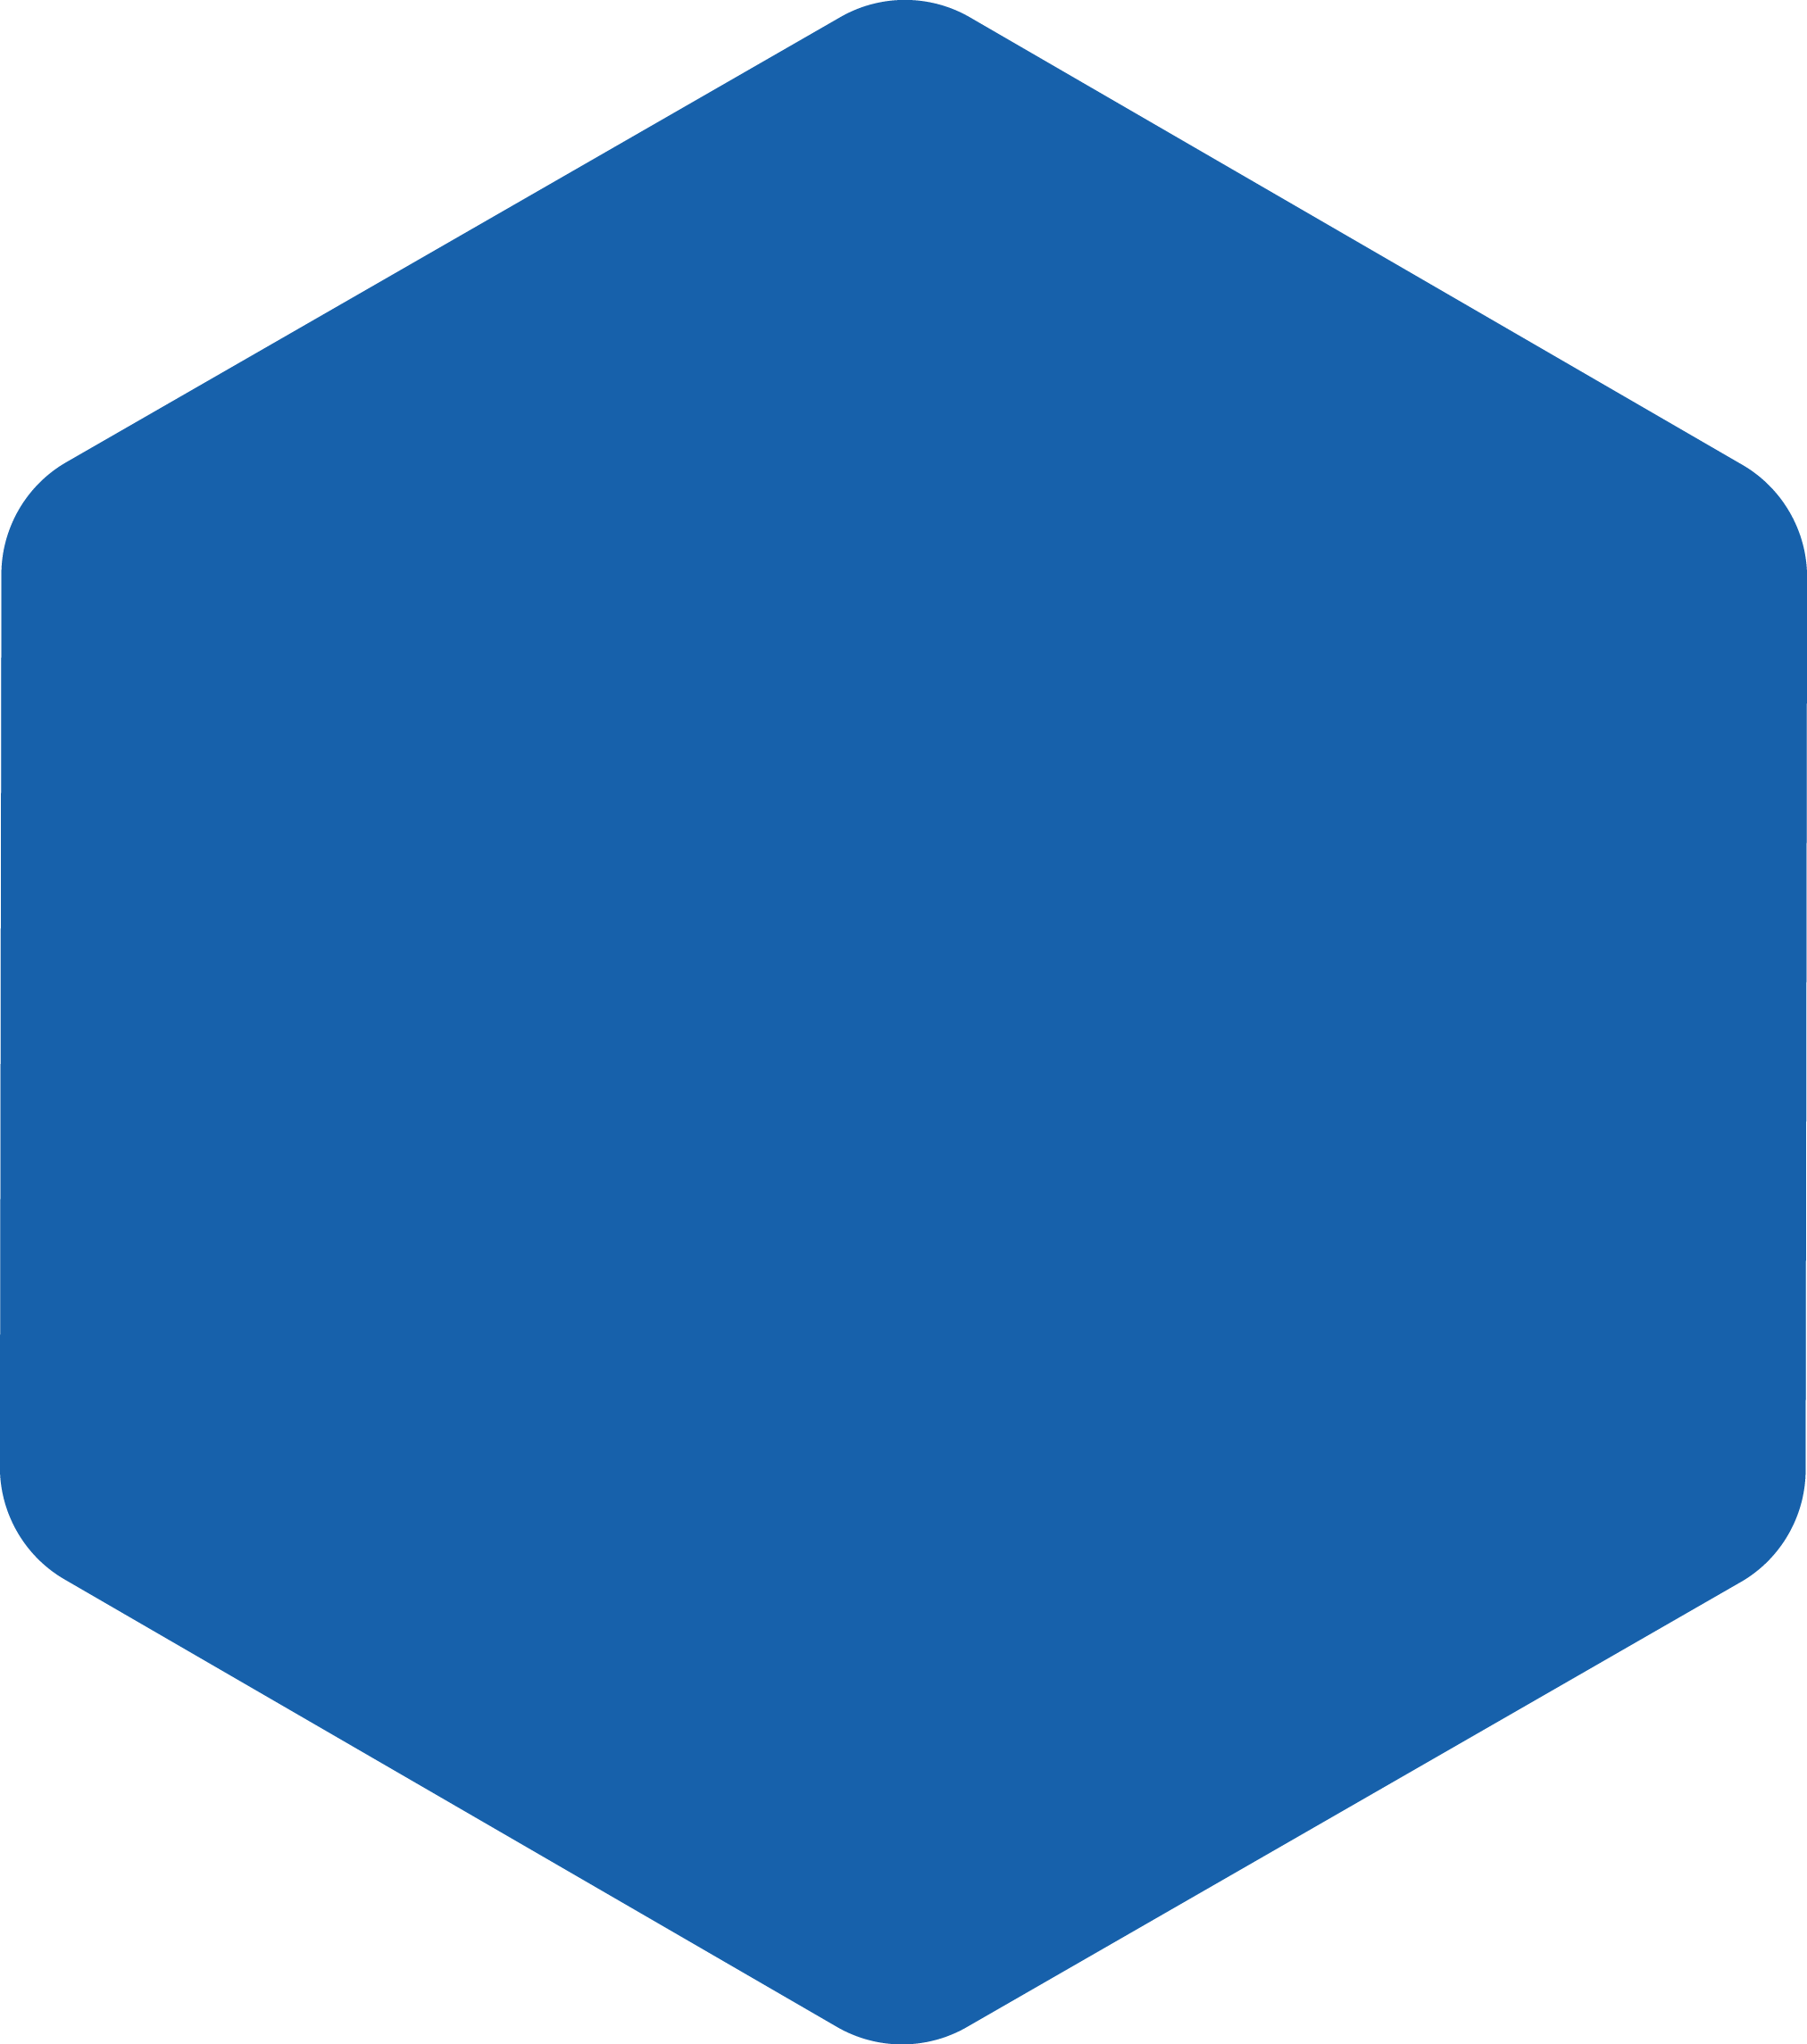 Hexagon Usono - Blue Hexagon Inc. (2024x2290), Png Download